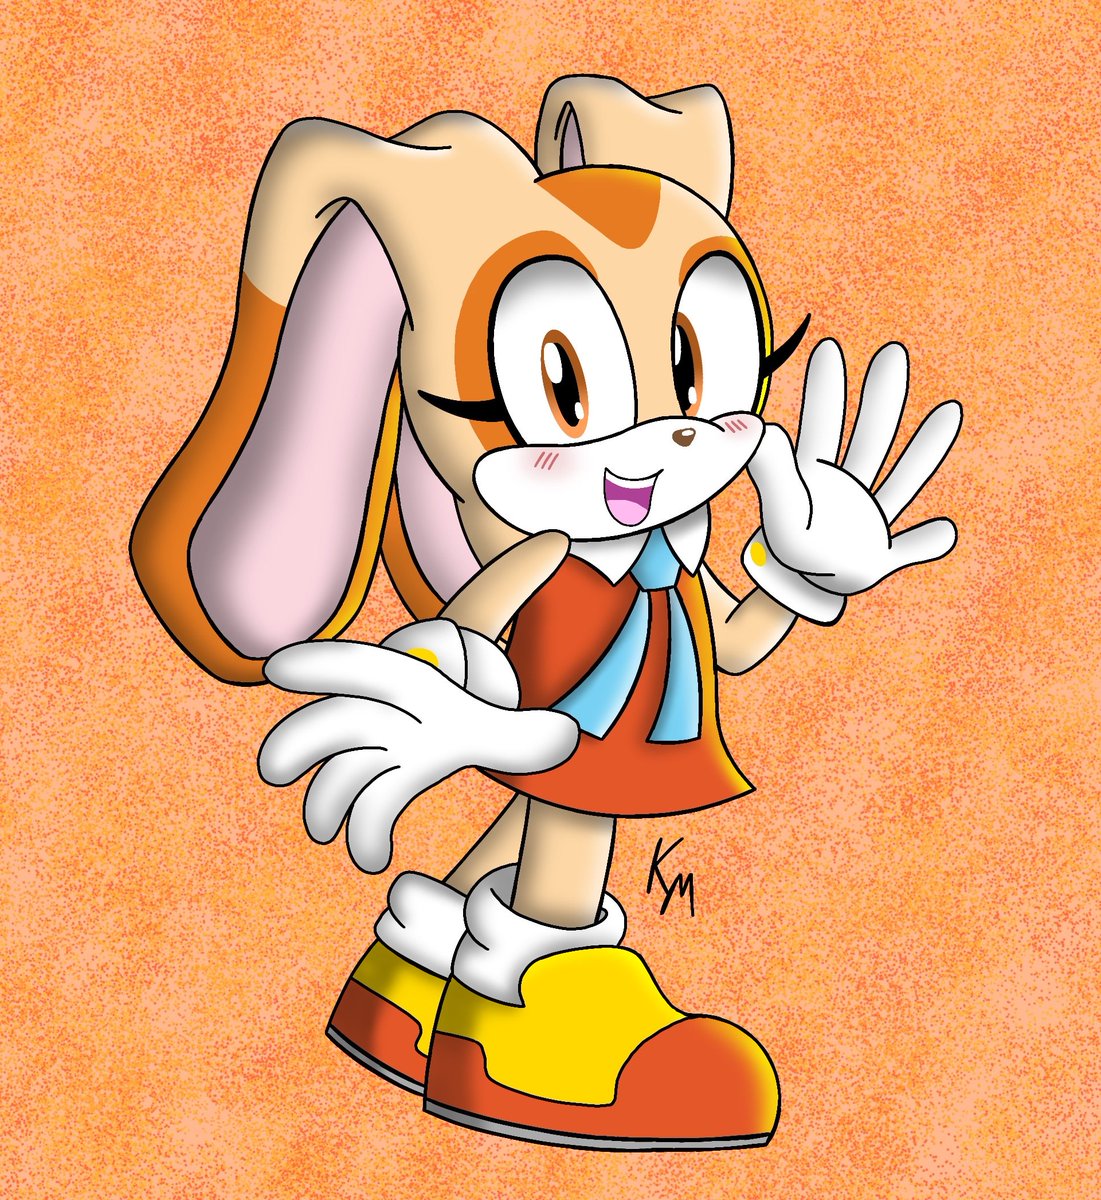 Got some more Cream the Rabbit art I've cooked up!
#SonicTheHedgehog #Sonic #CreamTheRabbit #sonicfanart